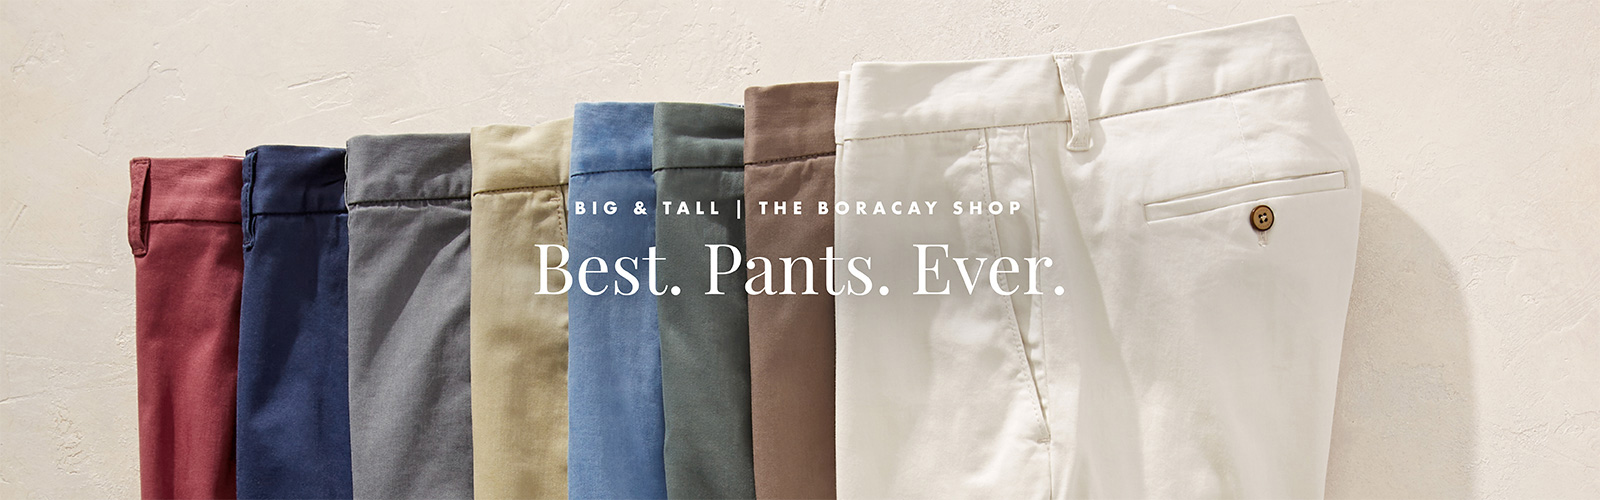 Big & Tall | The Boracay Shop - Best. Pants. Ever.